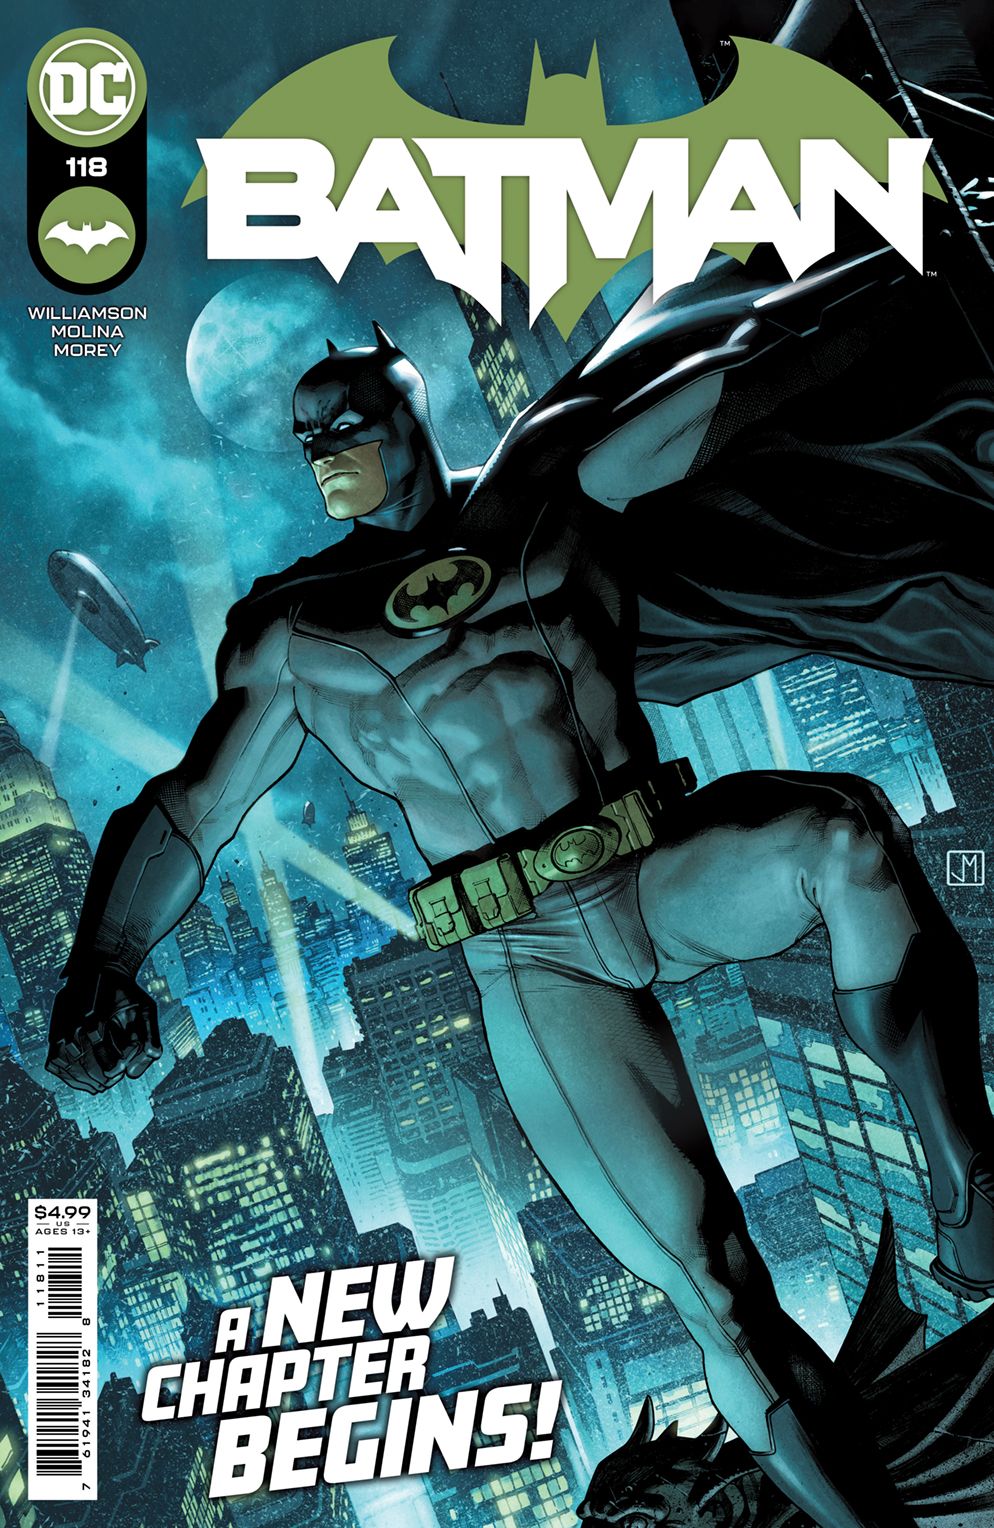 Batman #118 Comic